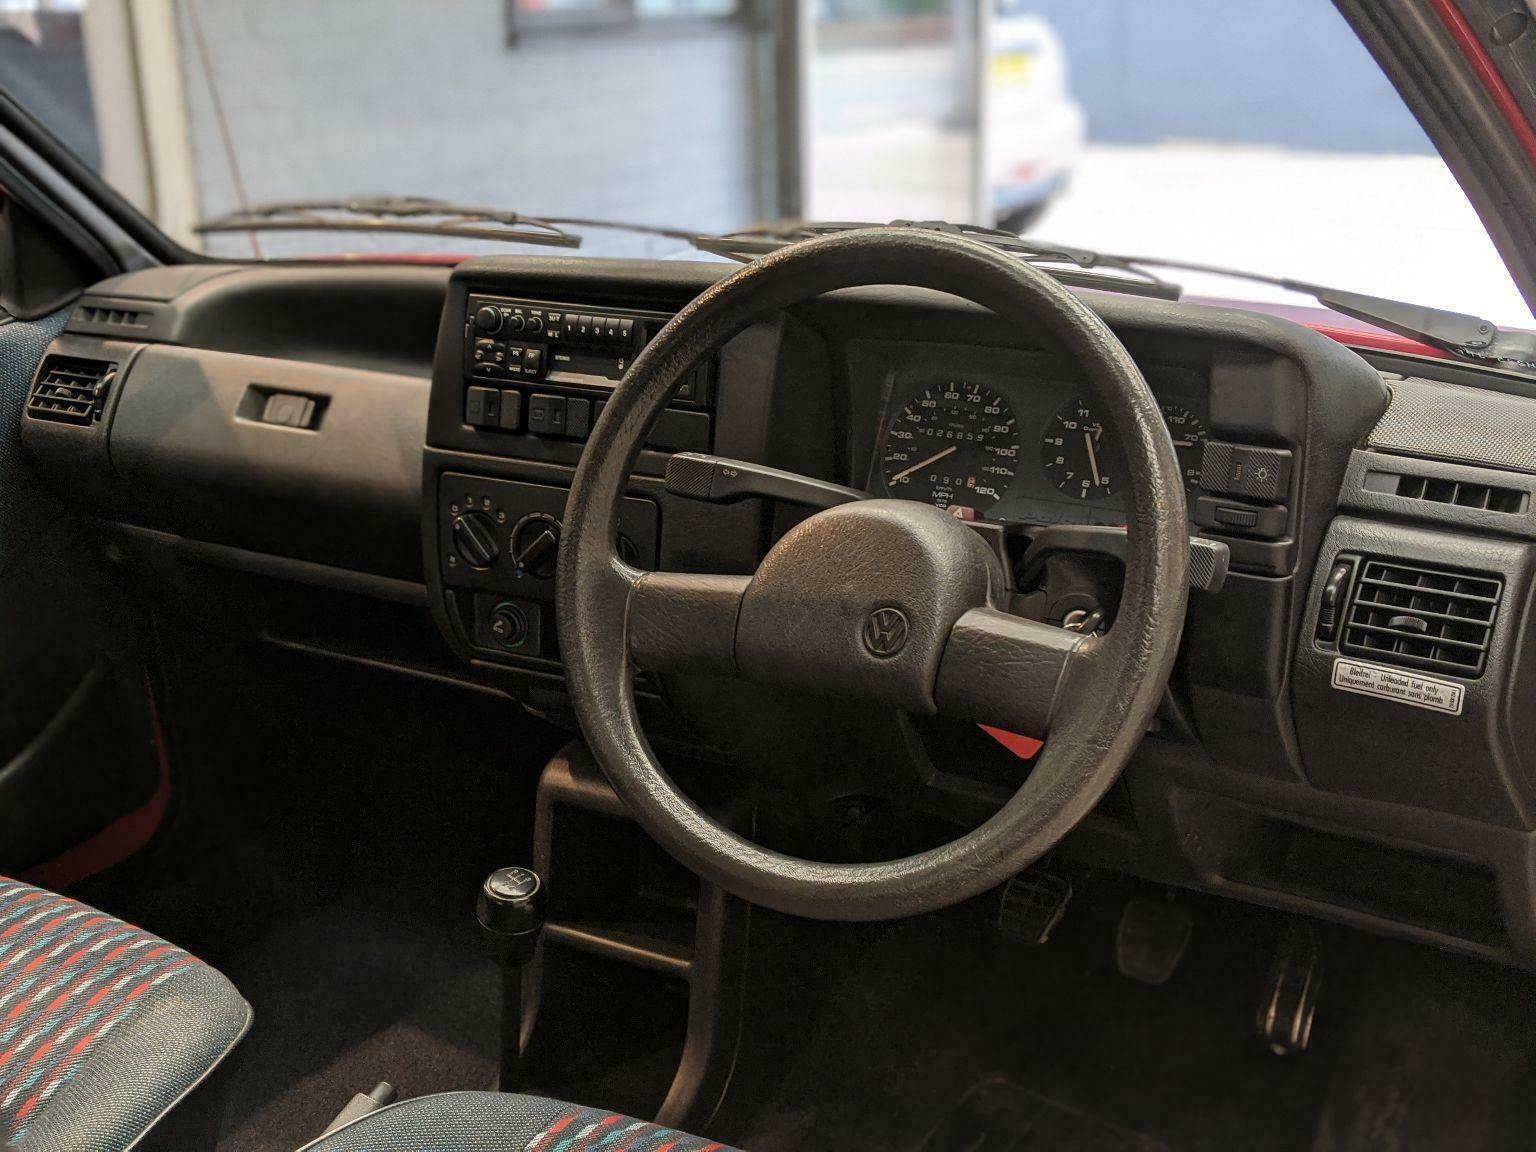 1991 Volkswagen Polo Coupe interior